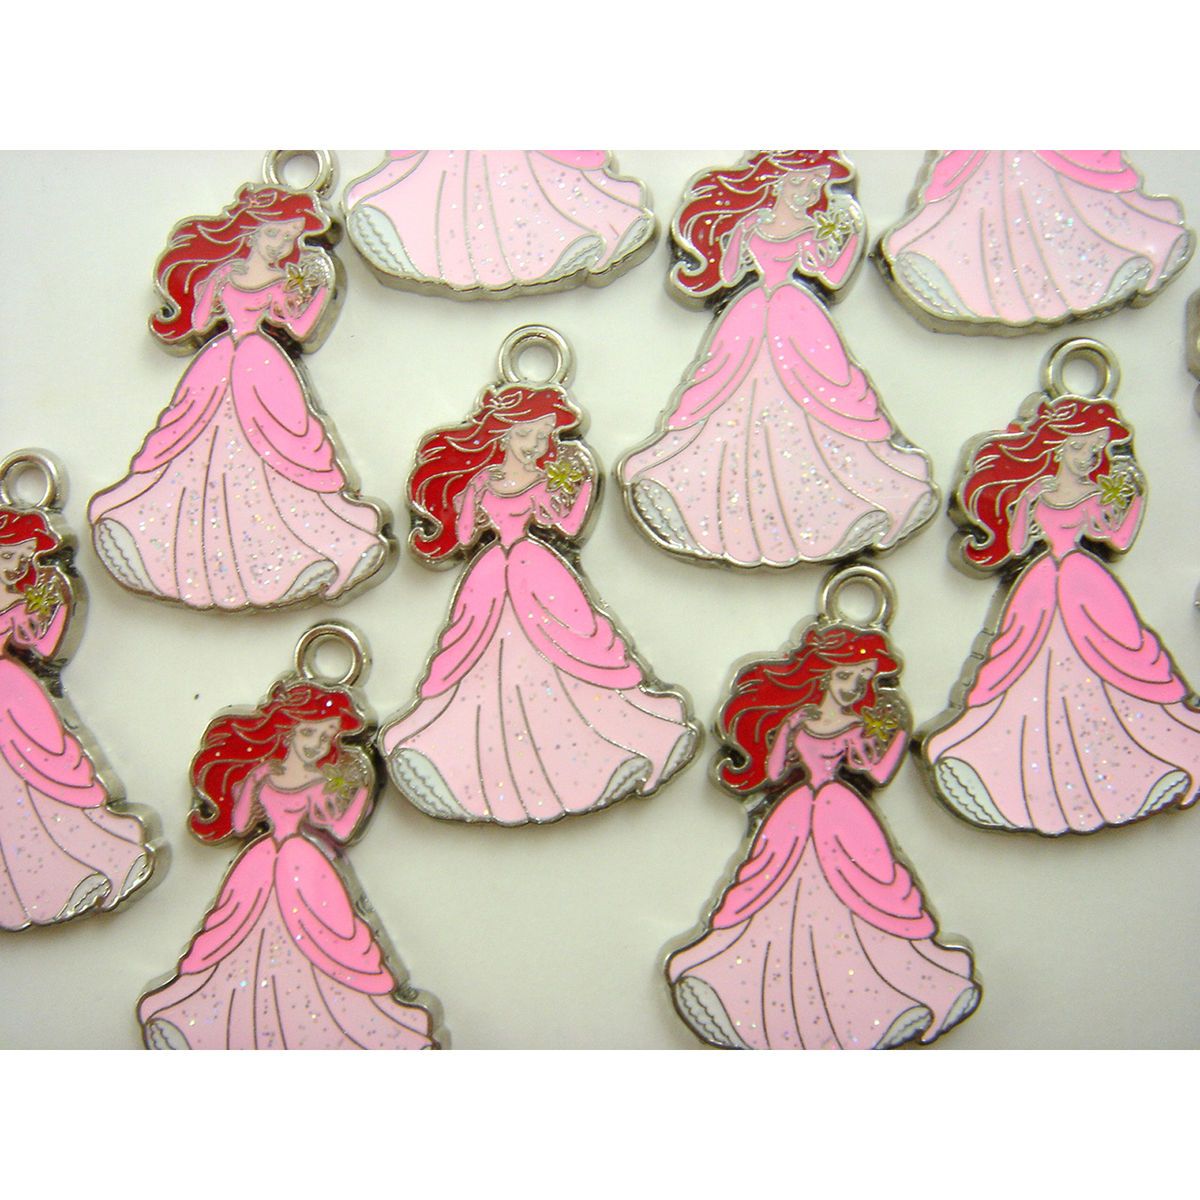 10 x Disney Princess Ariel Pink Jewelry Making Metal Figures Pendant